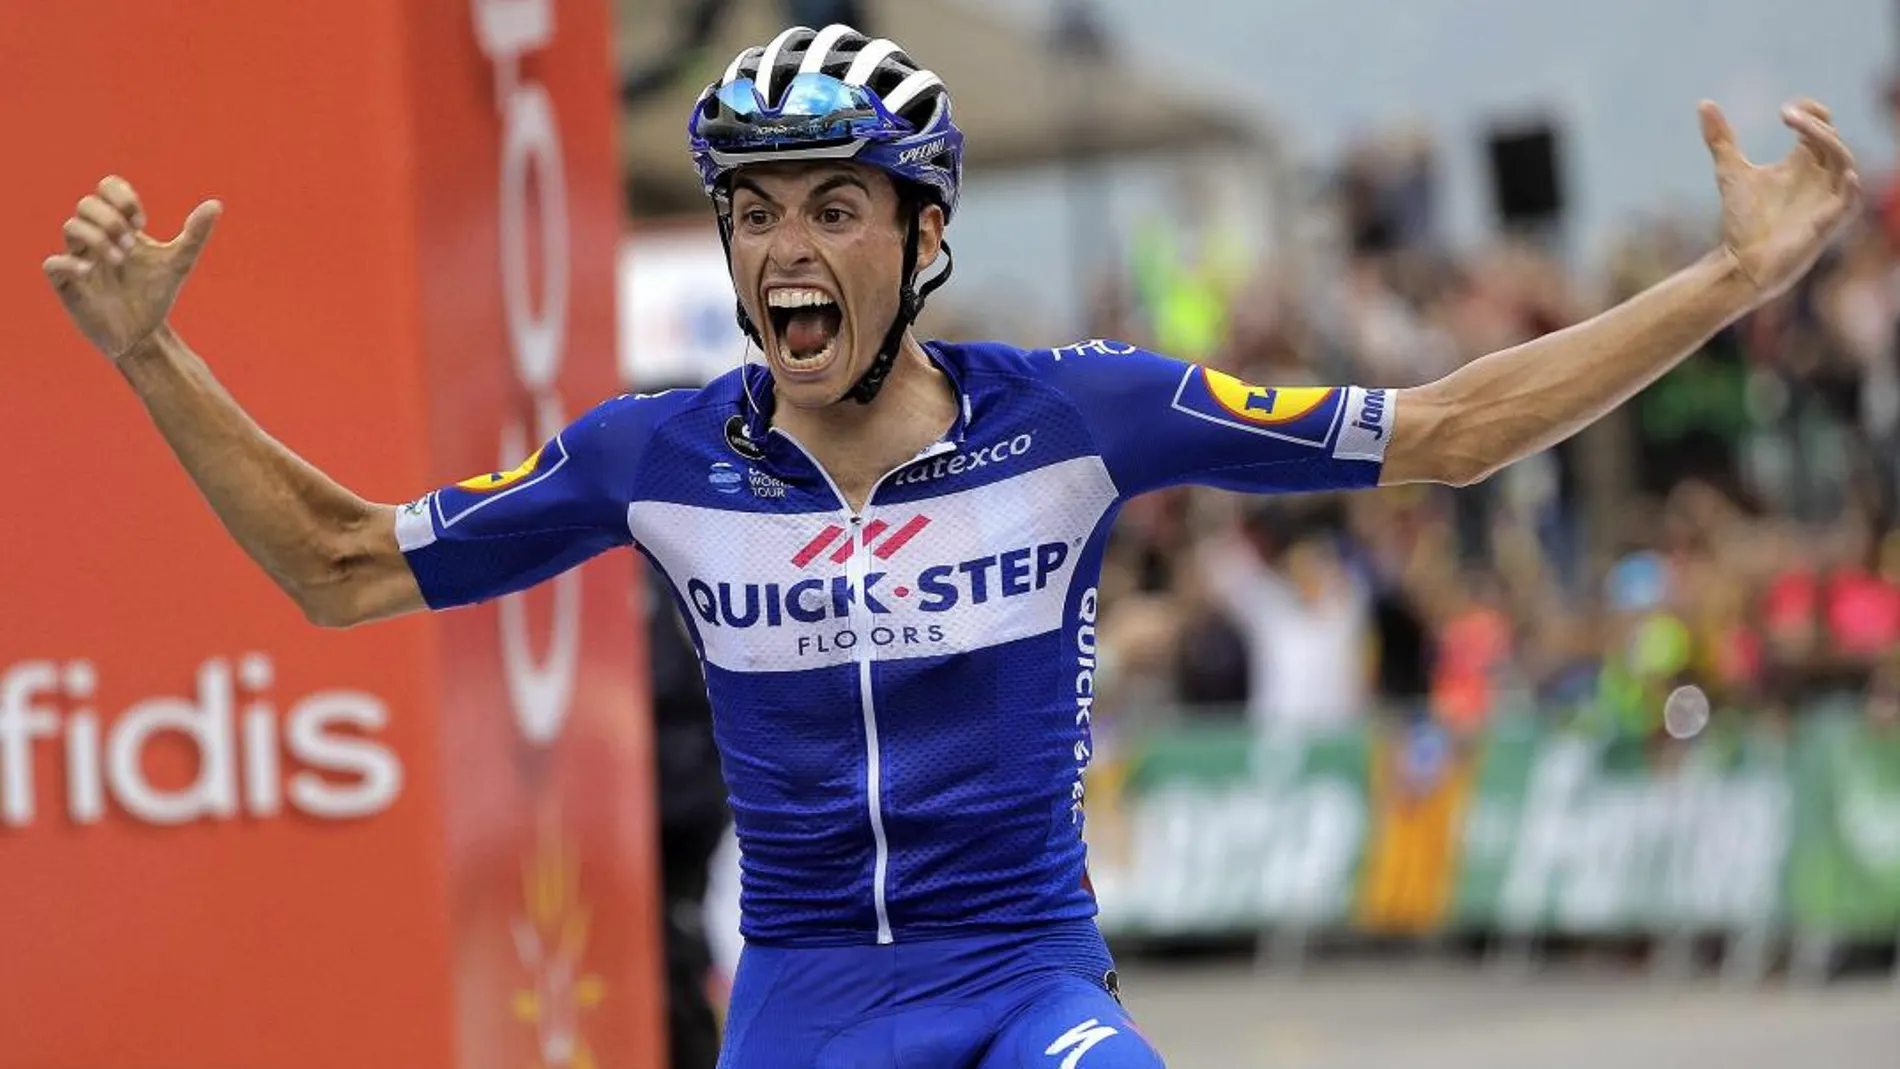 El español Enric Mas (Quick Step) se impone vencedor de la vigésima etapa de la Vuelta. EFE/Manuel Bruque